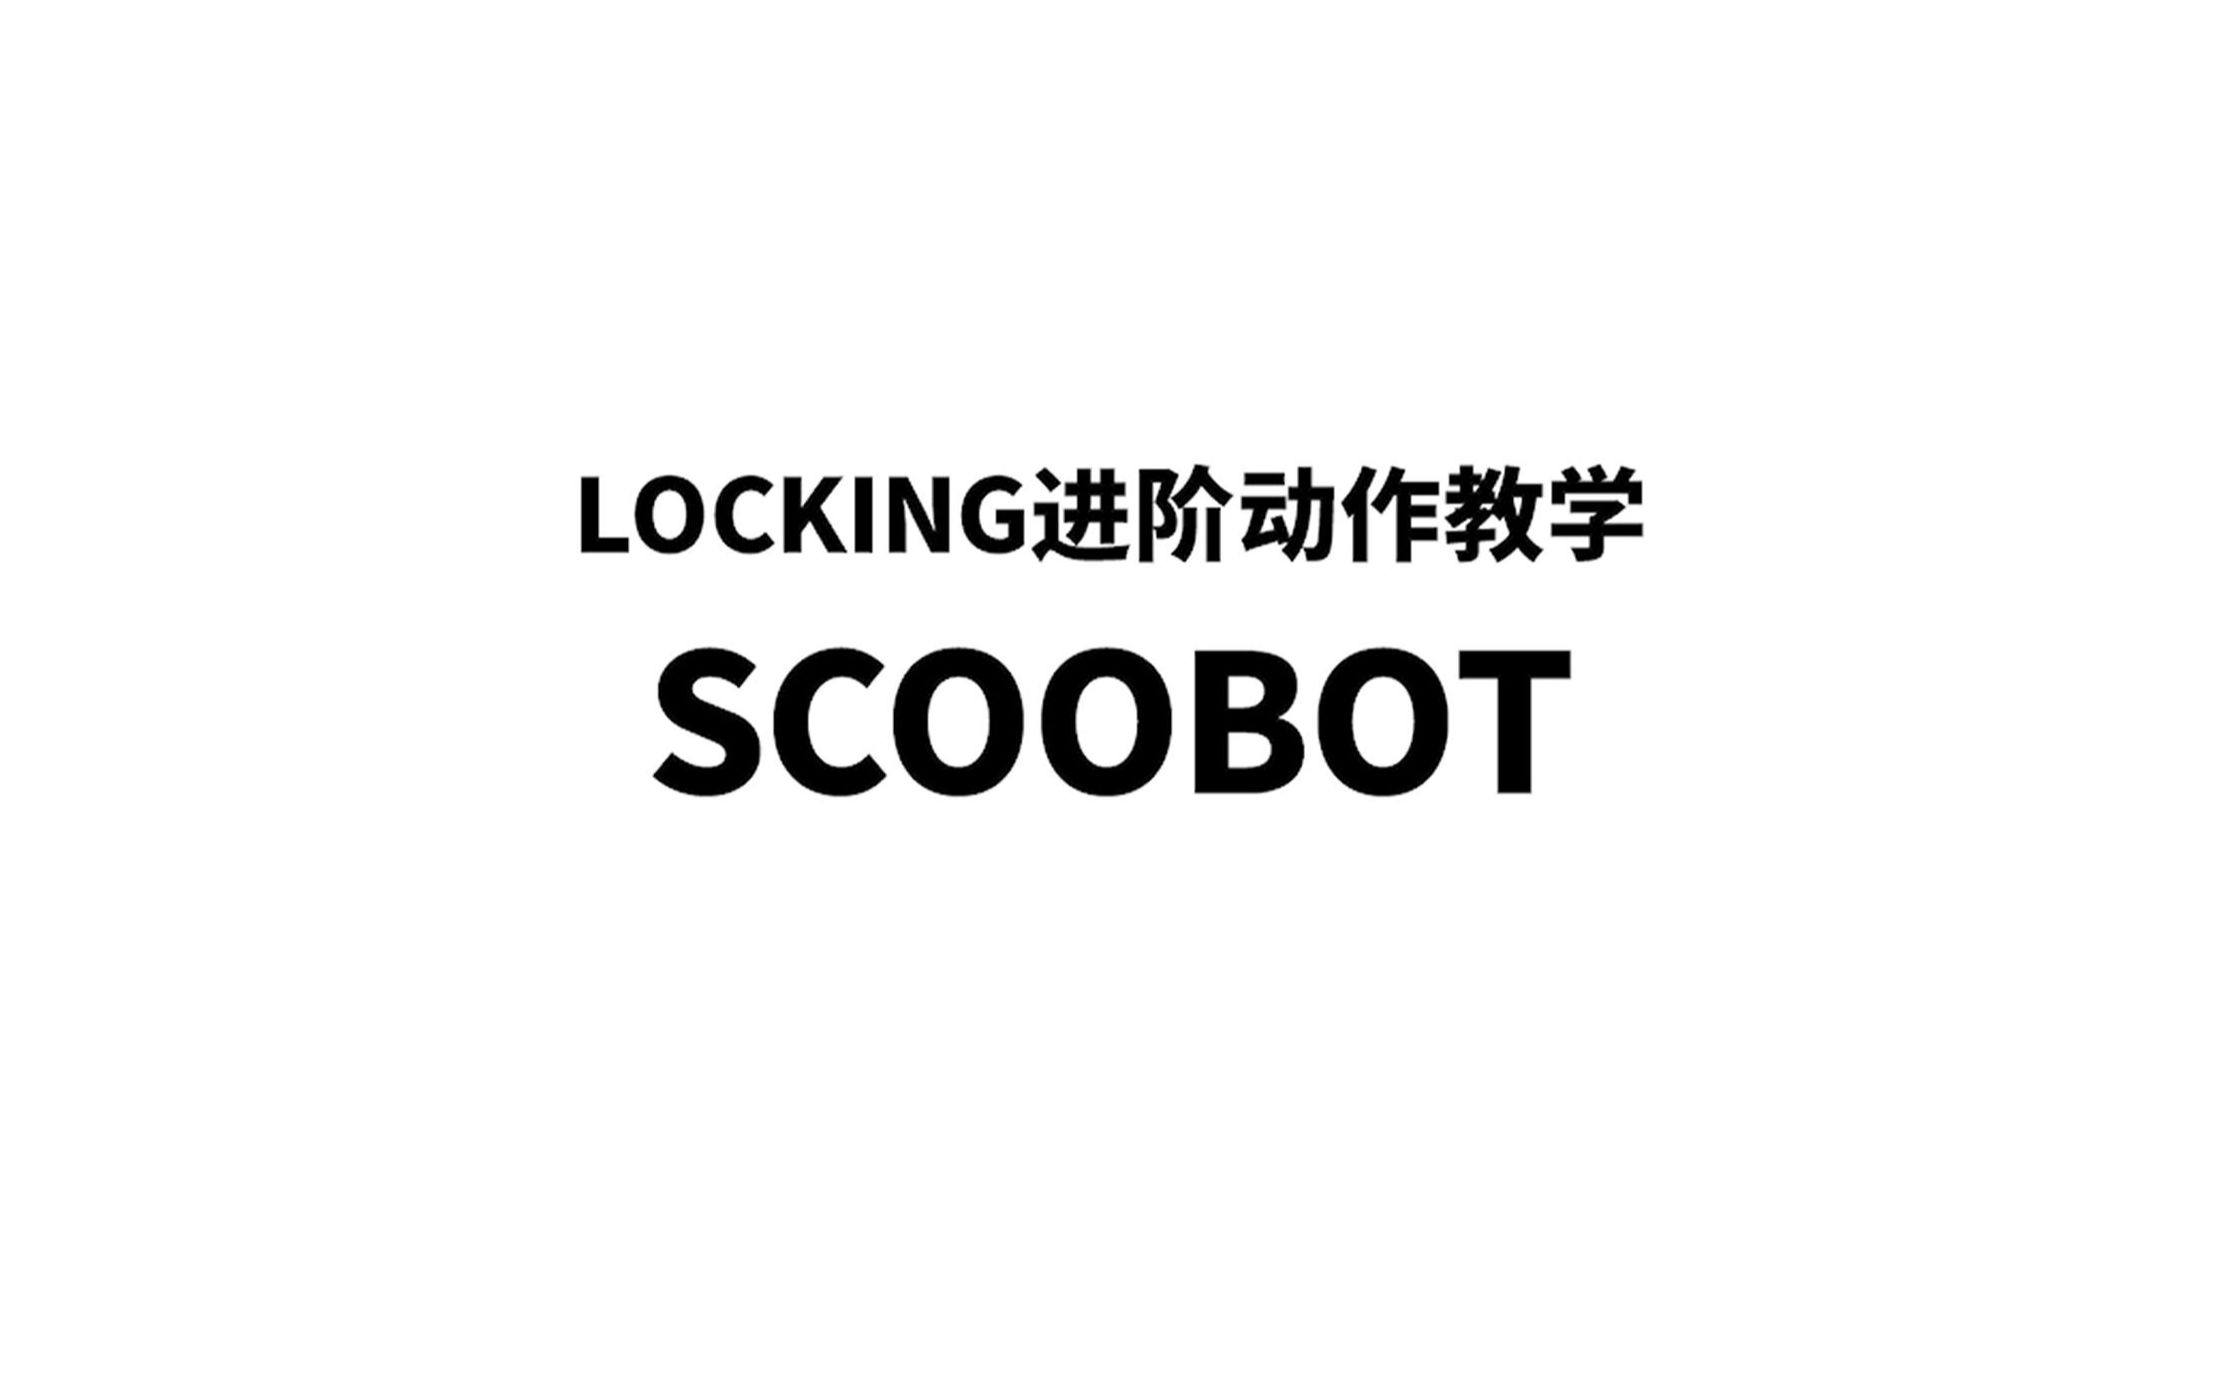 LOCKING齐舞必备，SCOOBOT【LFD街舞达人孵化站/LOCKING基础教程】